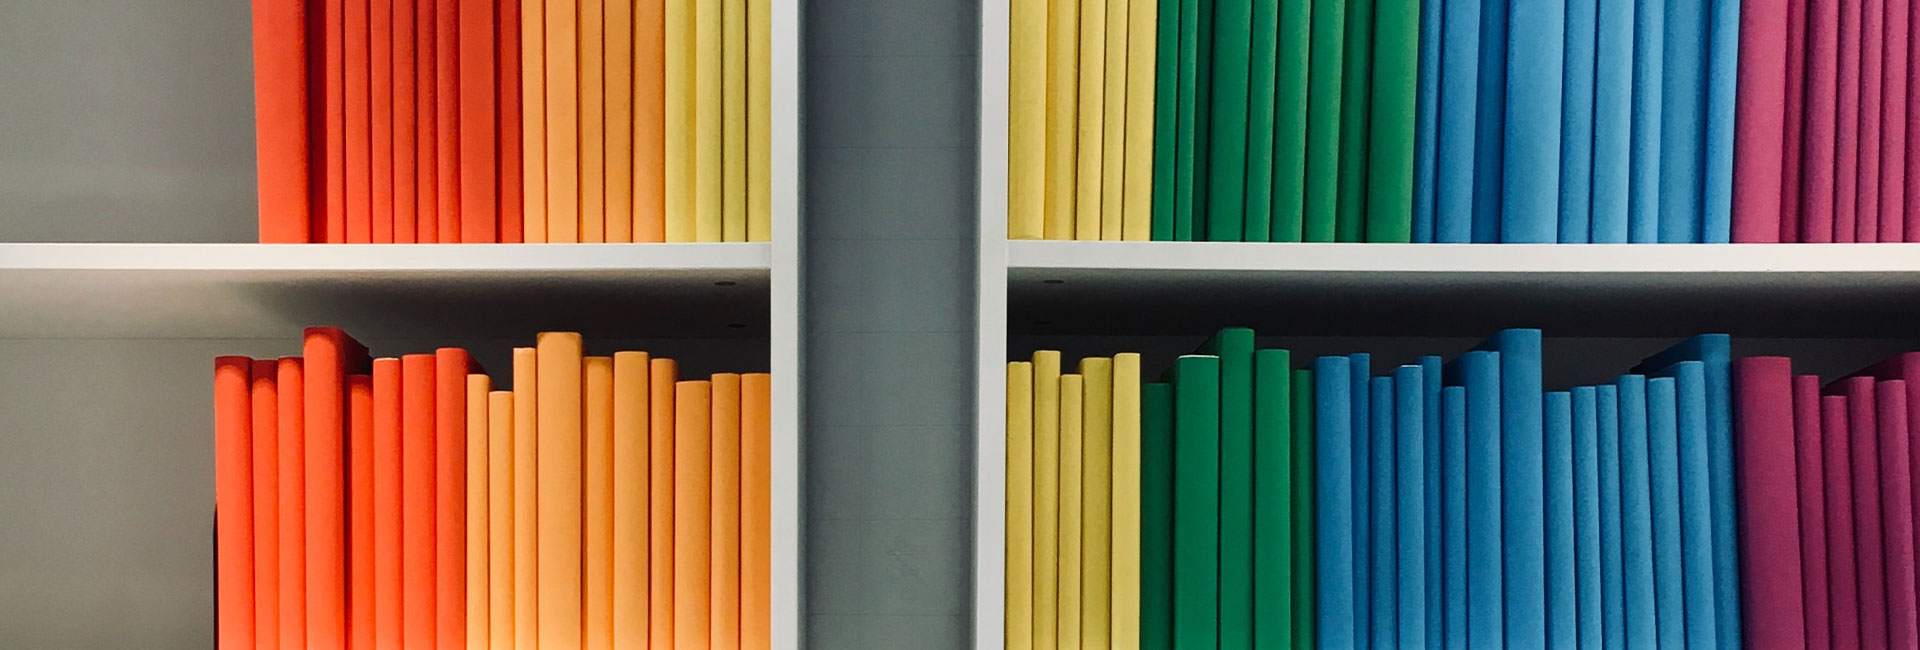 rainbow-colored-books-on-white-shelf